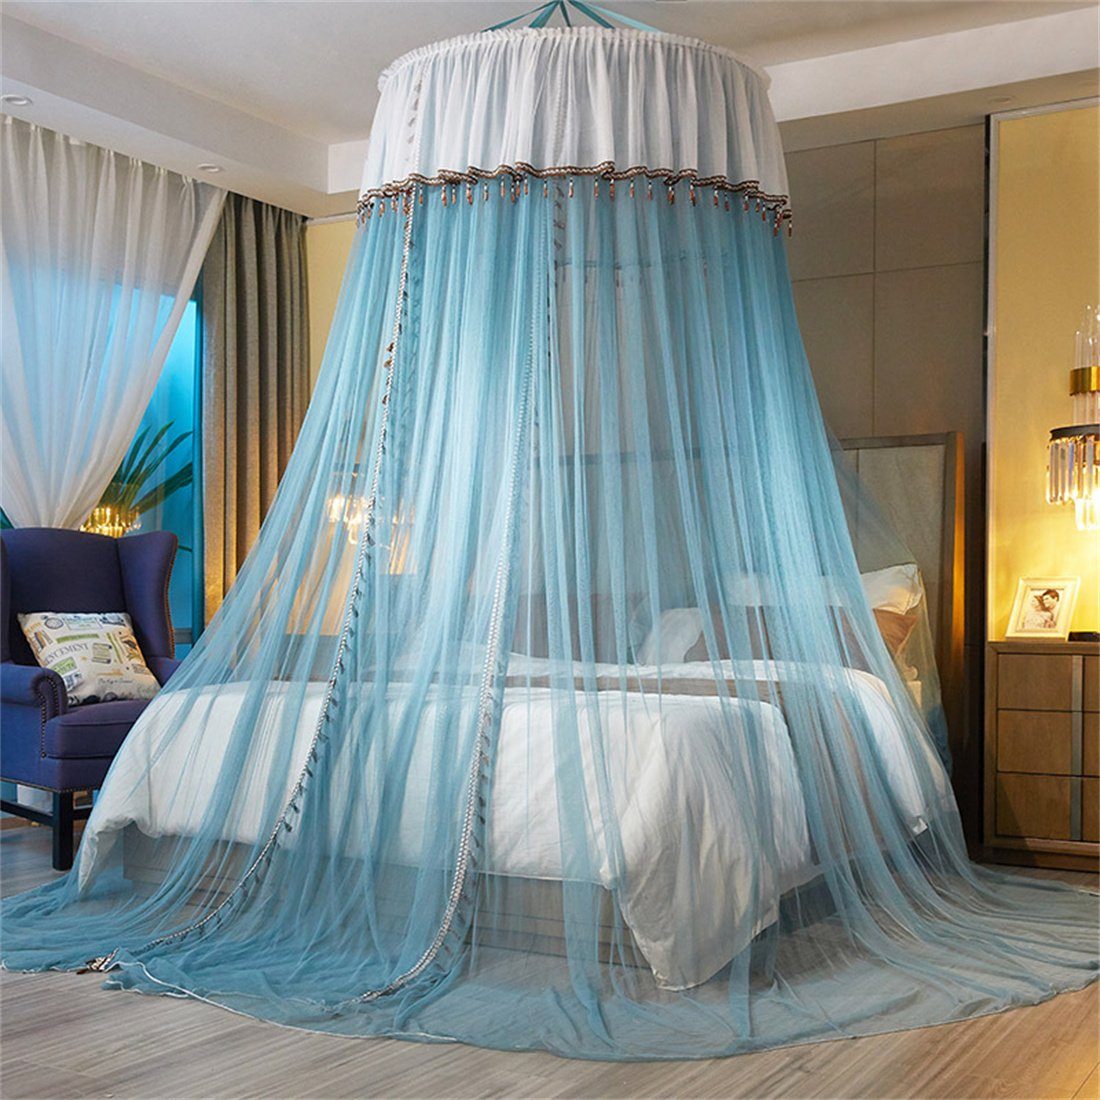 Betthimmel Vorhang ZAXSD Moskitonetz,Anti-Moskito Bettdecke Bett blau Prinzessin Stil Kuppel